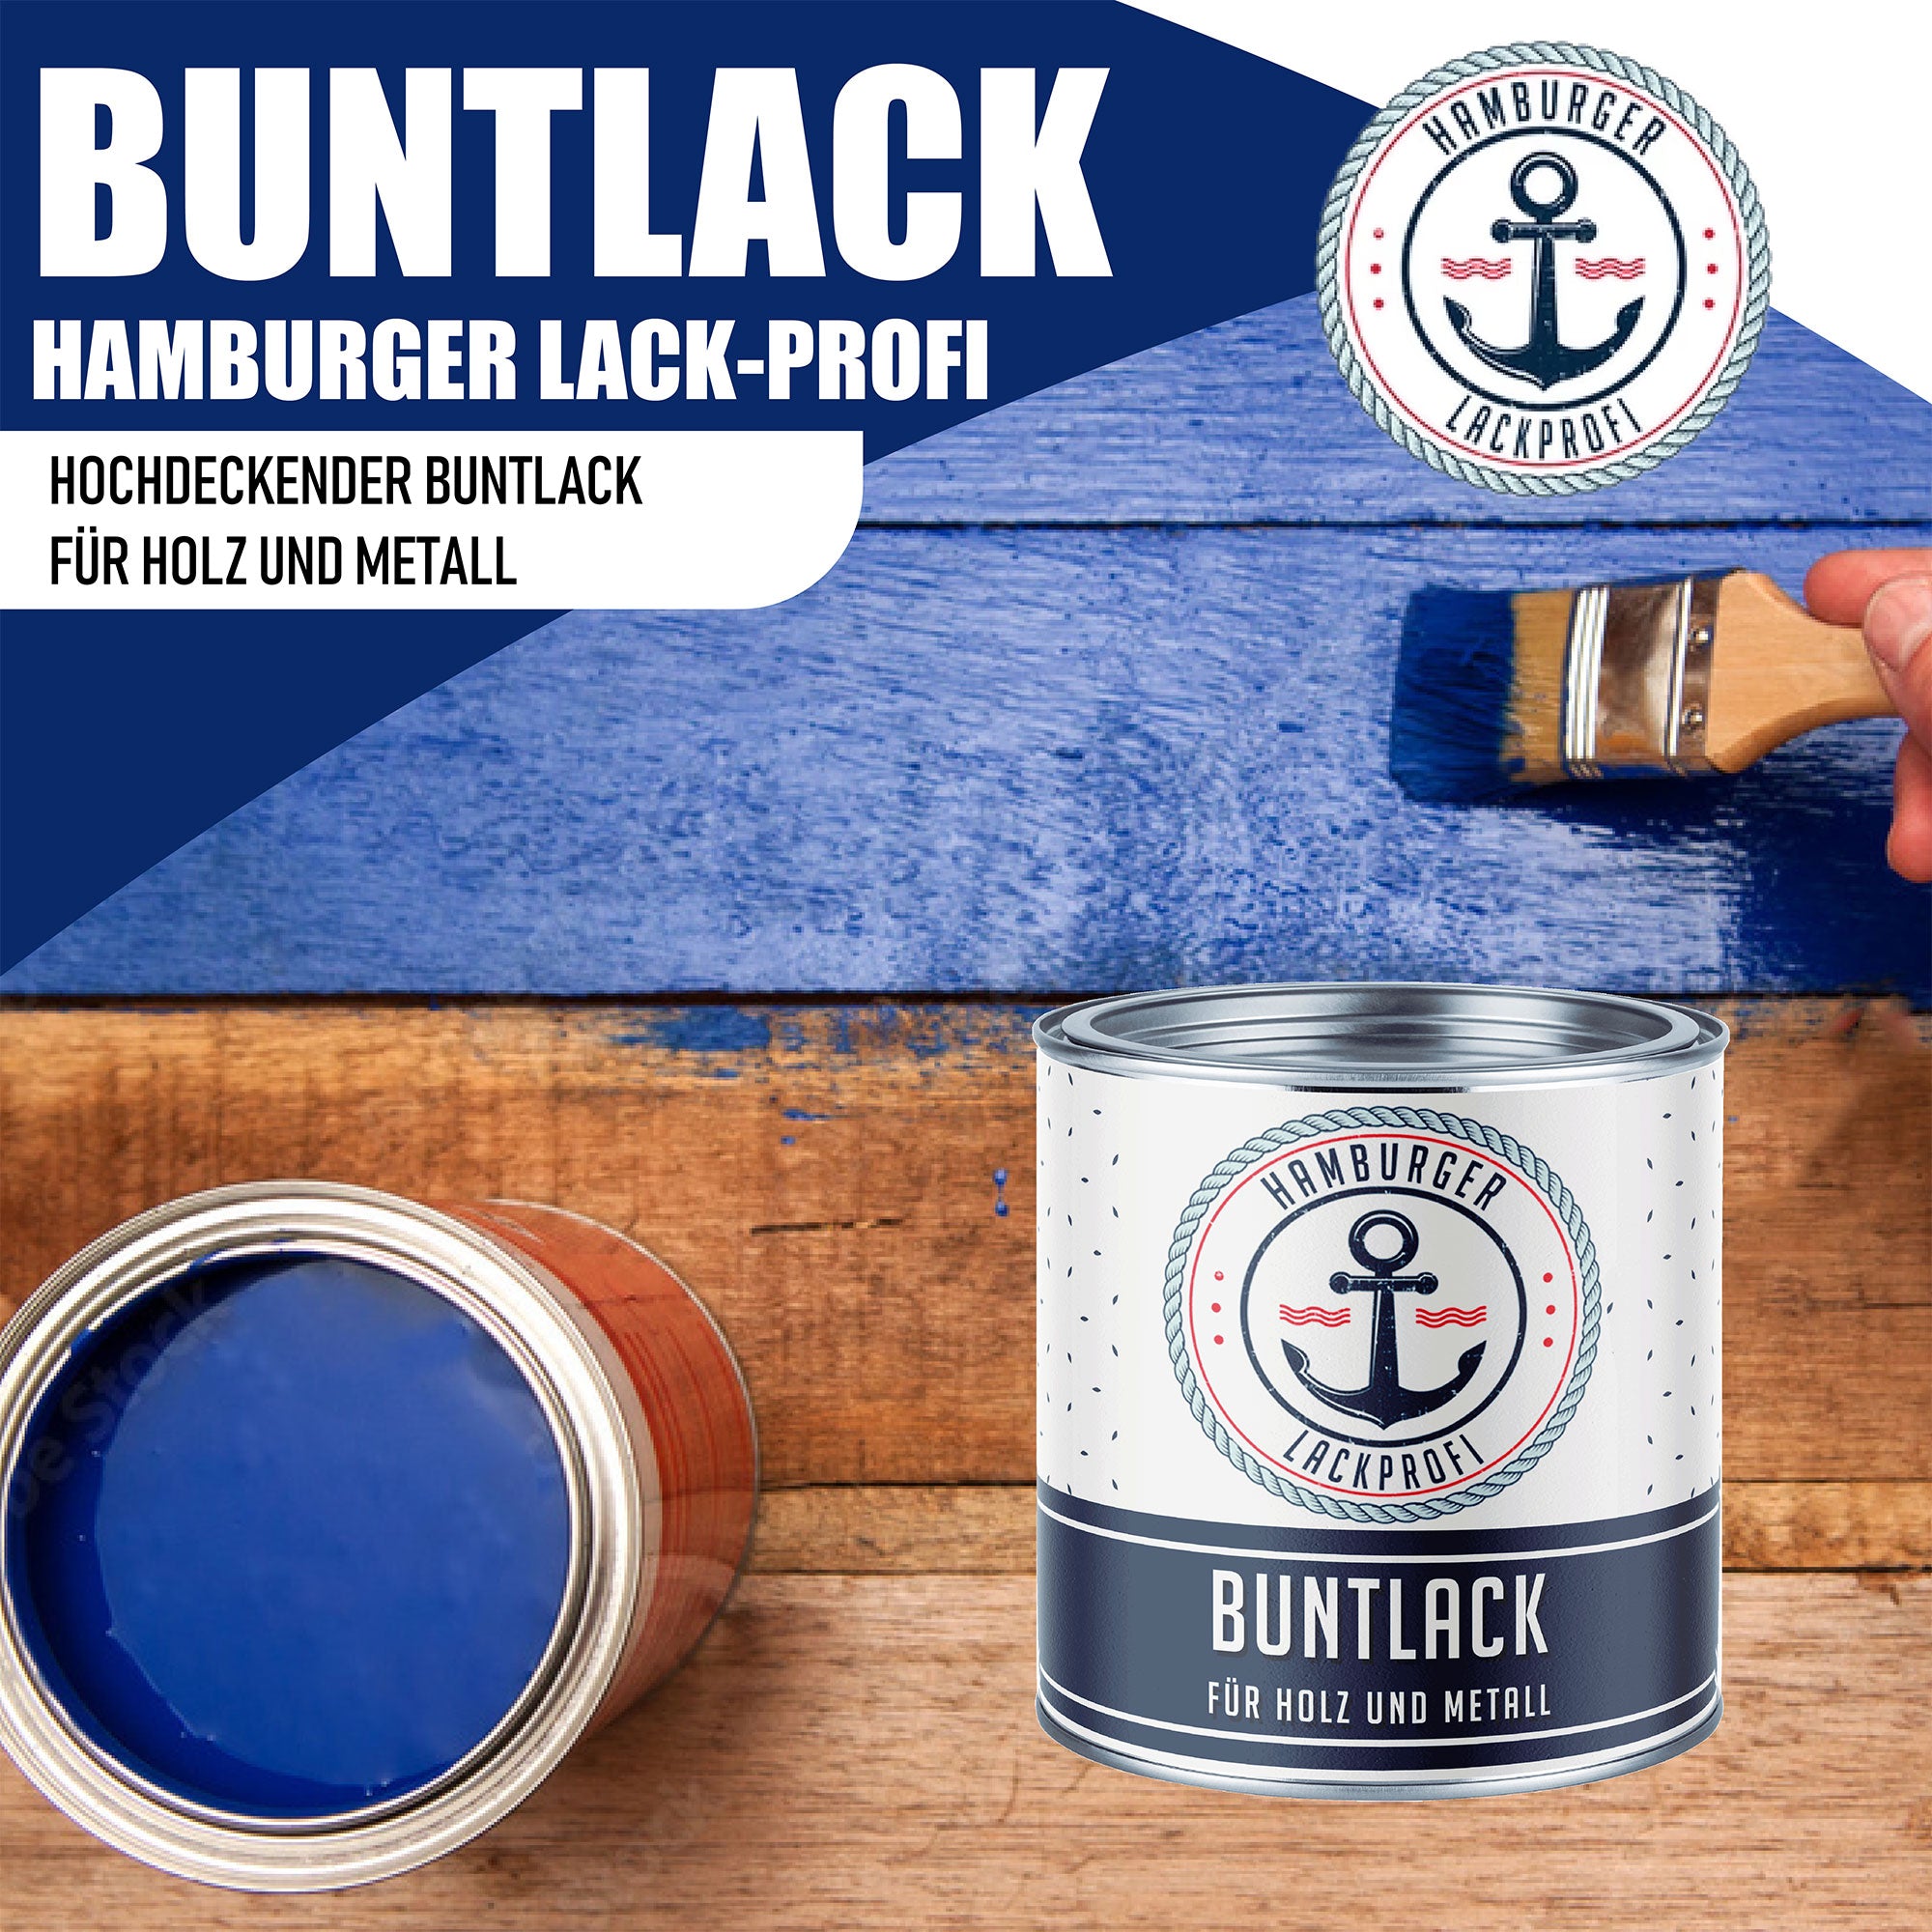 Hamburger Lack-Profi Buntlack Achatgrau RAL 7038 - Robuster Kunstharzlack